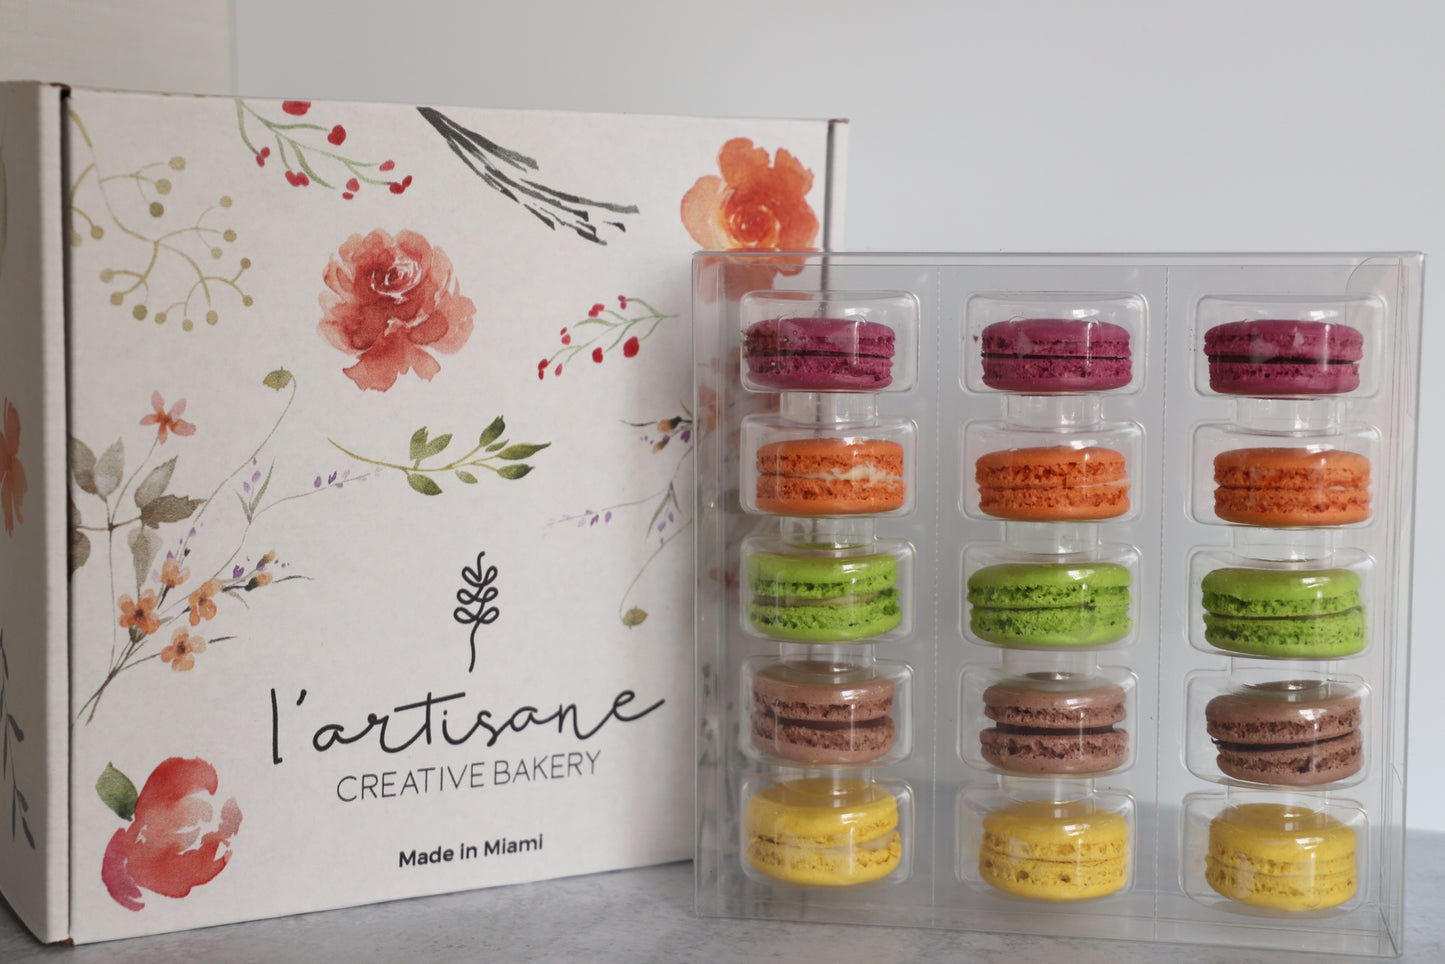 Indulge in a sweet, vegan treat with L'Artisane Creative Bakery's nationwide shipping macaron box.